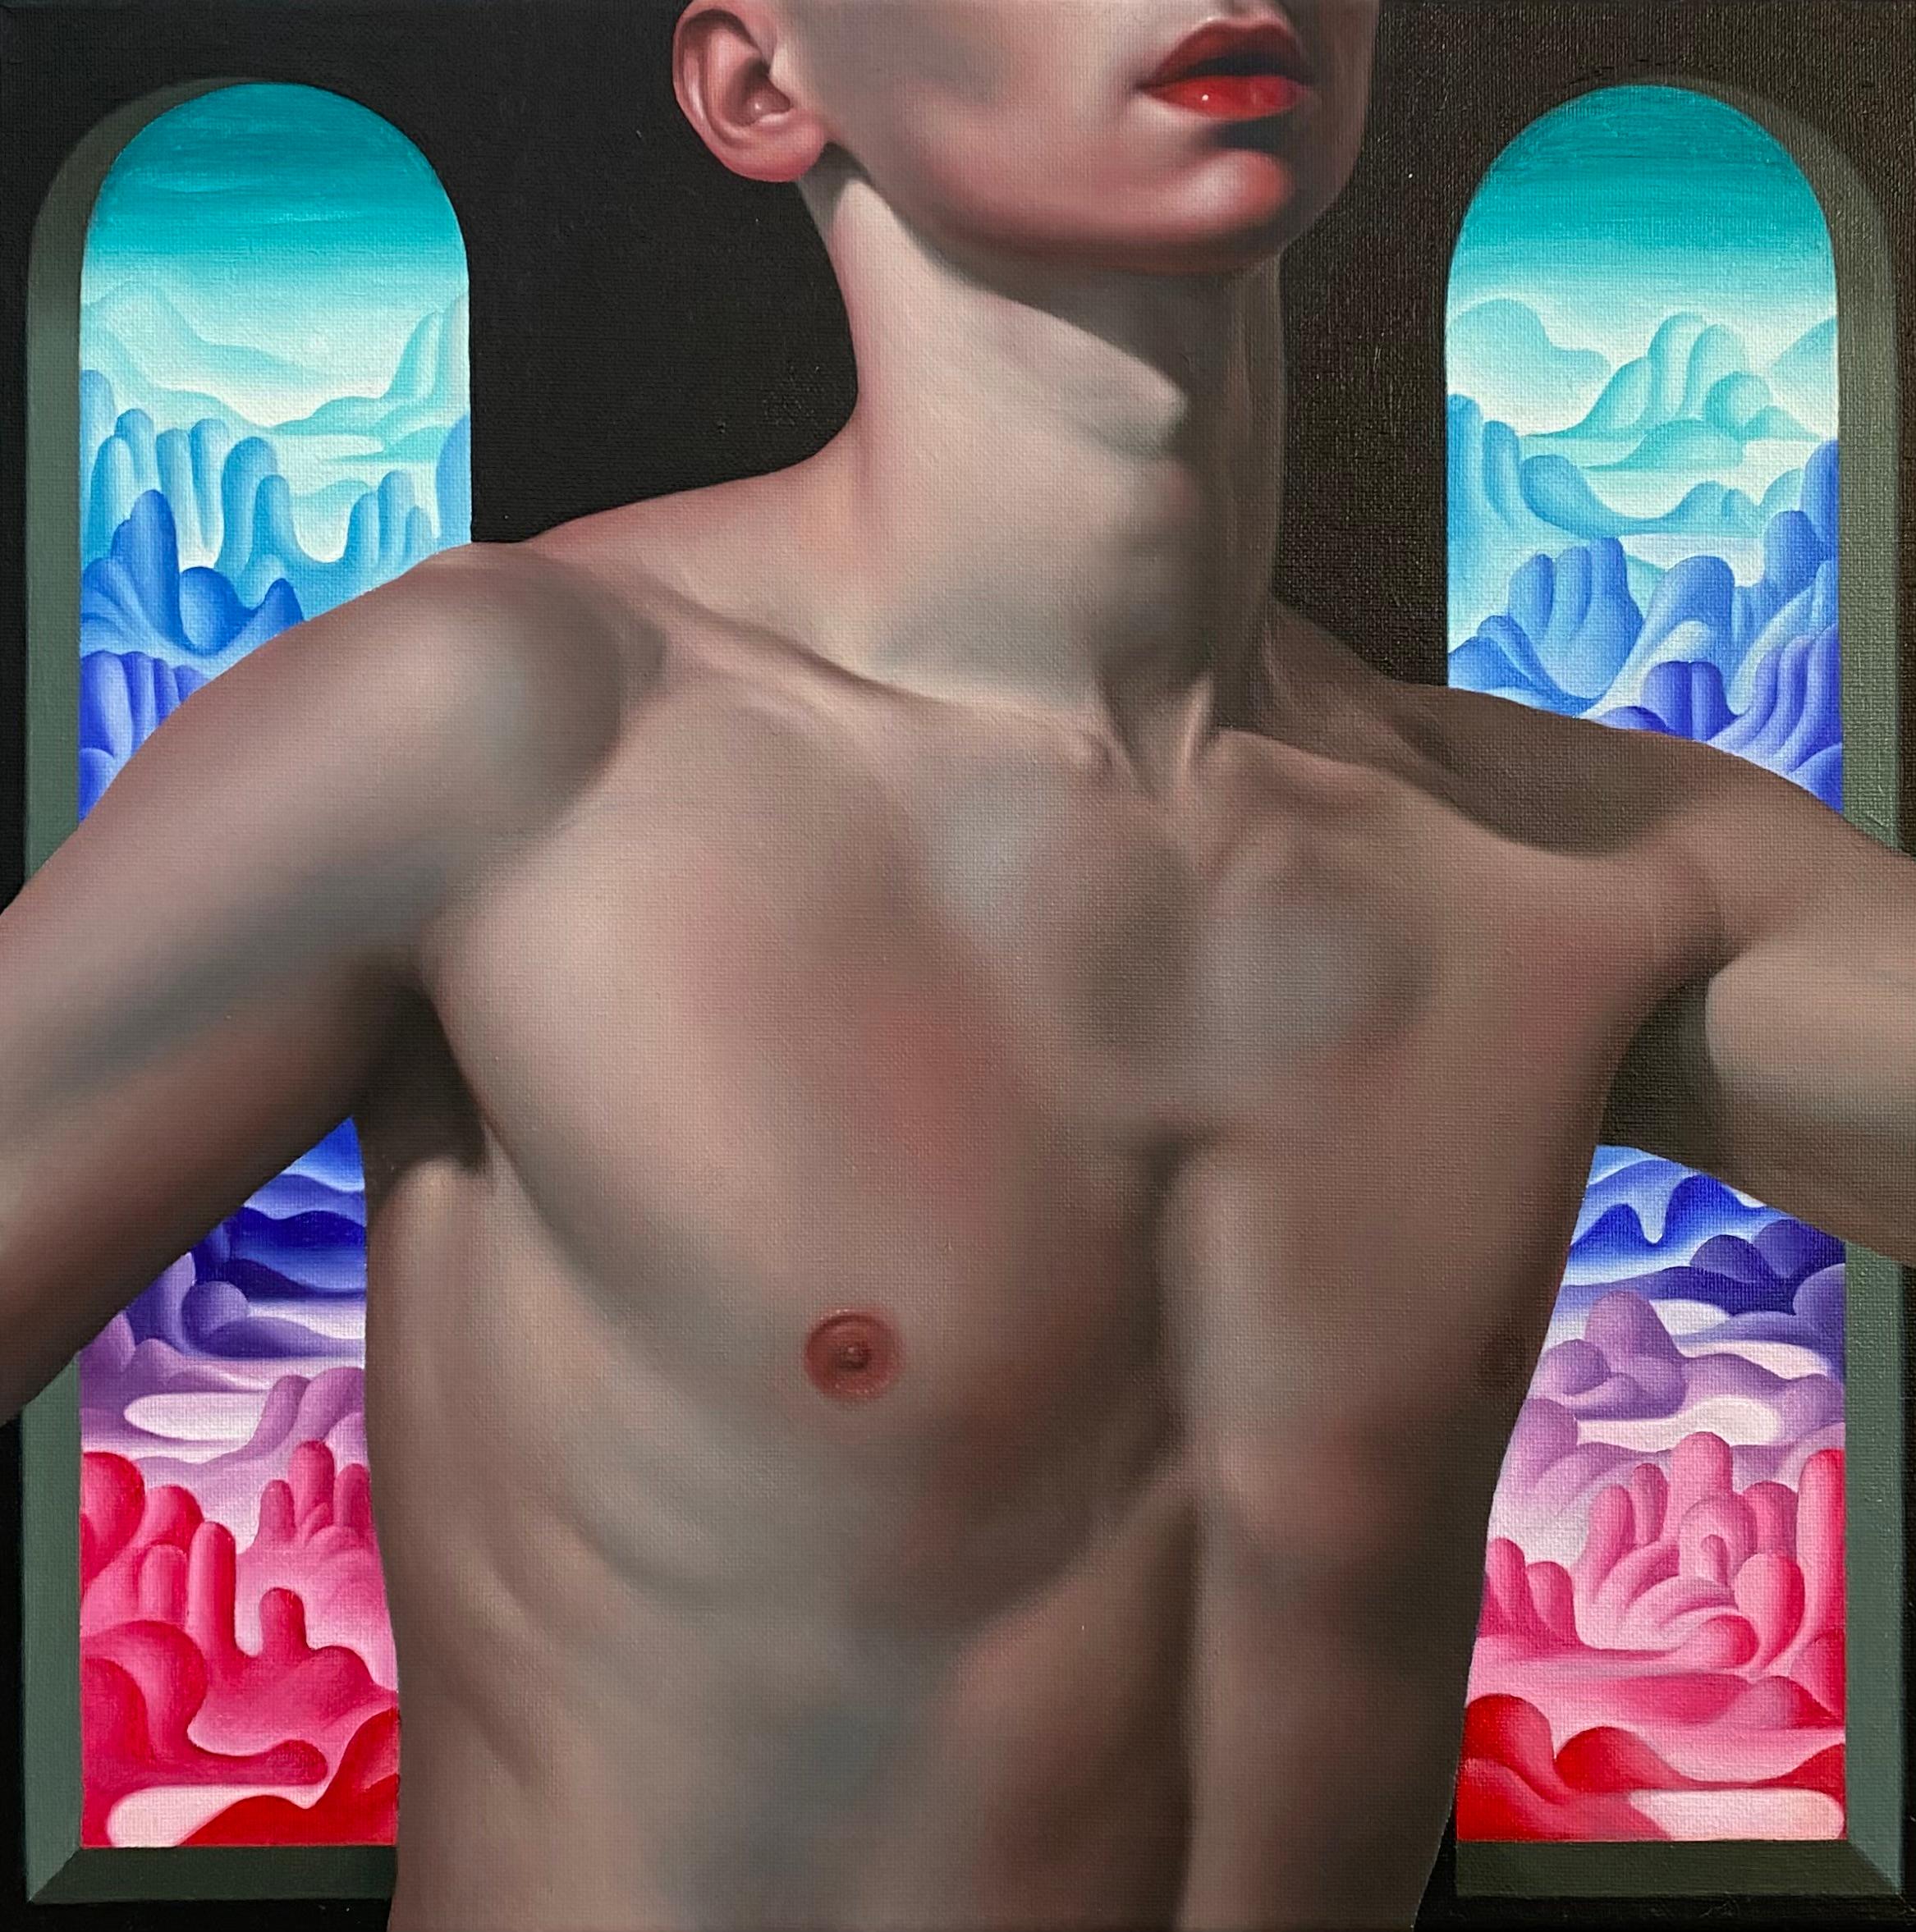 Krzysztof Stępniewski Nude Painting - Midnight- 21 Century Contemporary Modern Painting of a Young Nude Boy